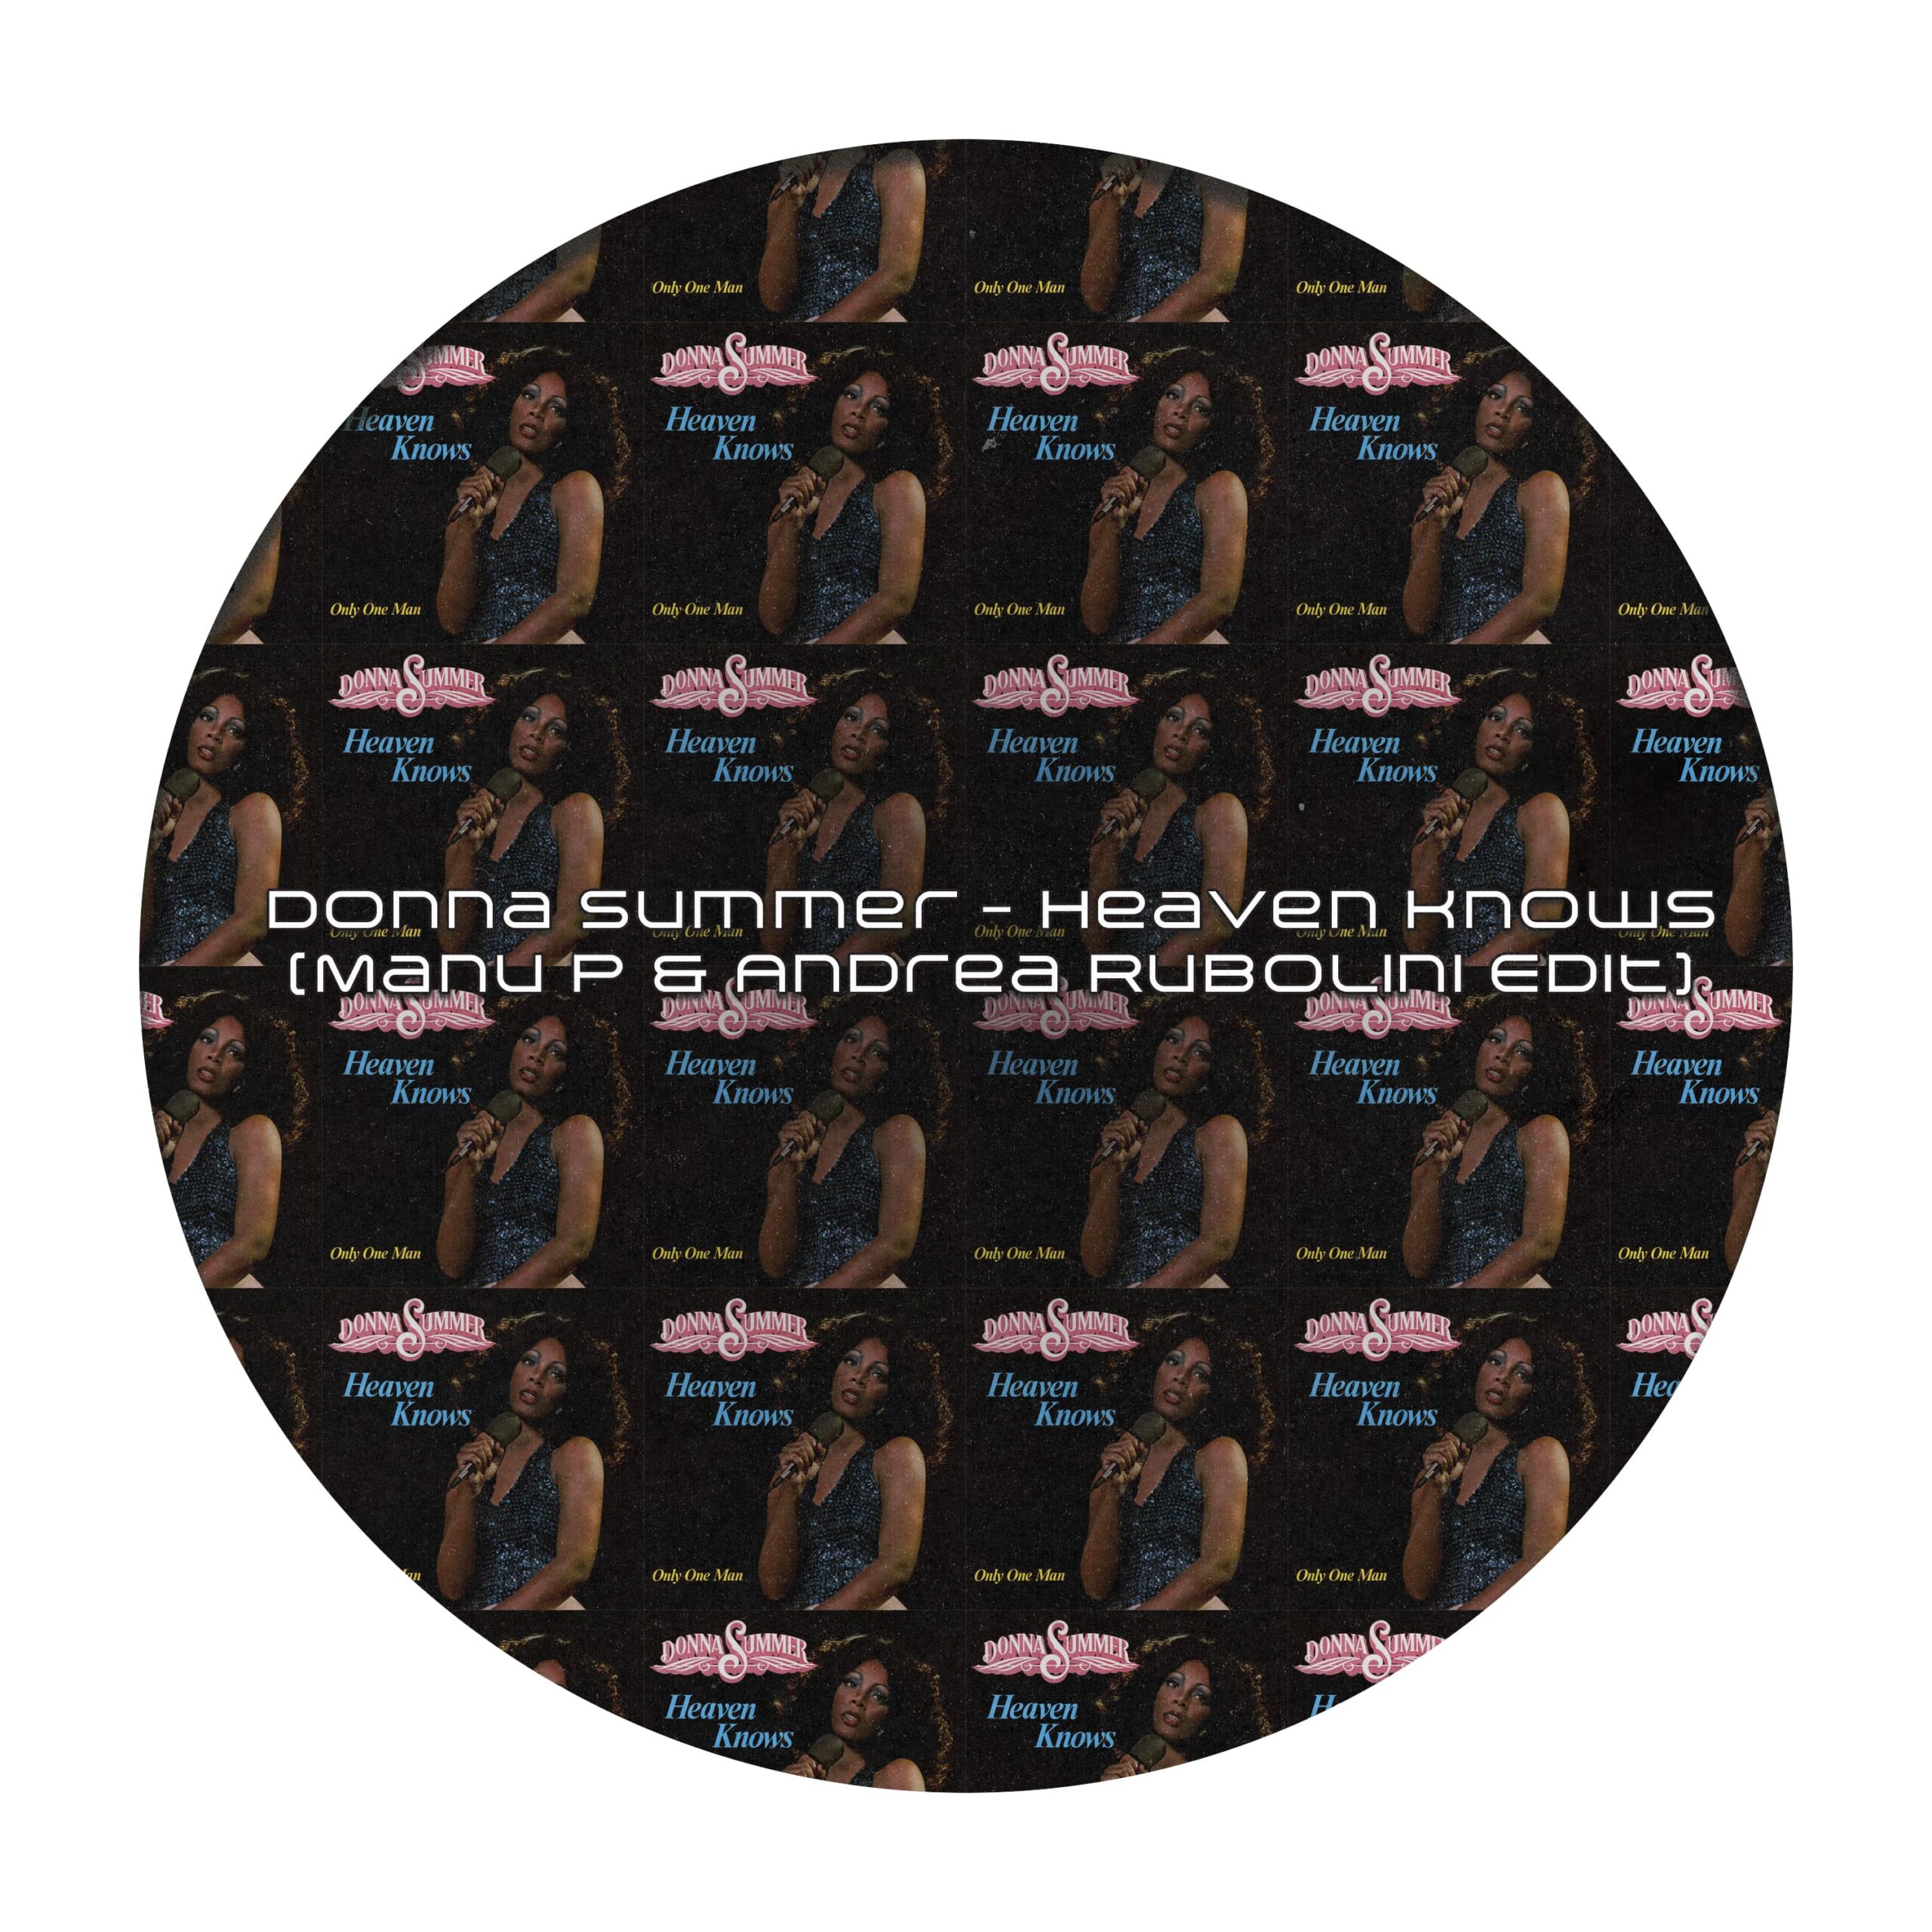 Disco Magic: Manu P & Andrea Rubolini's Remix of Donna Summer's Hit 'Heaven Knows'